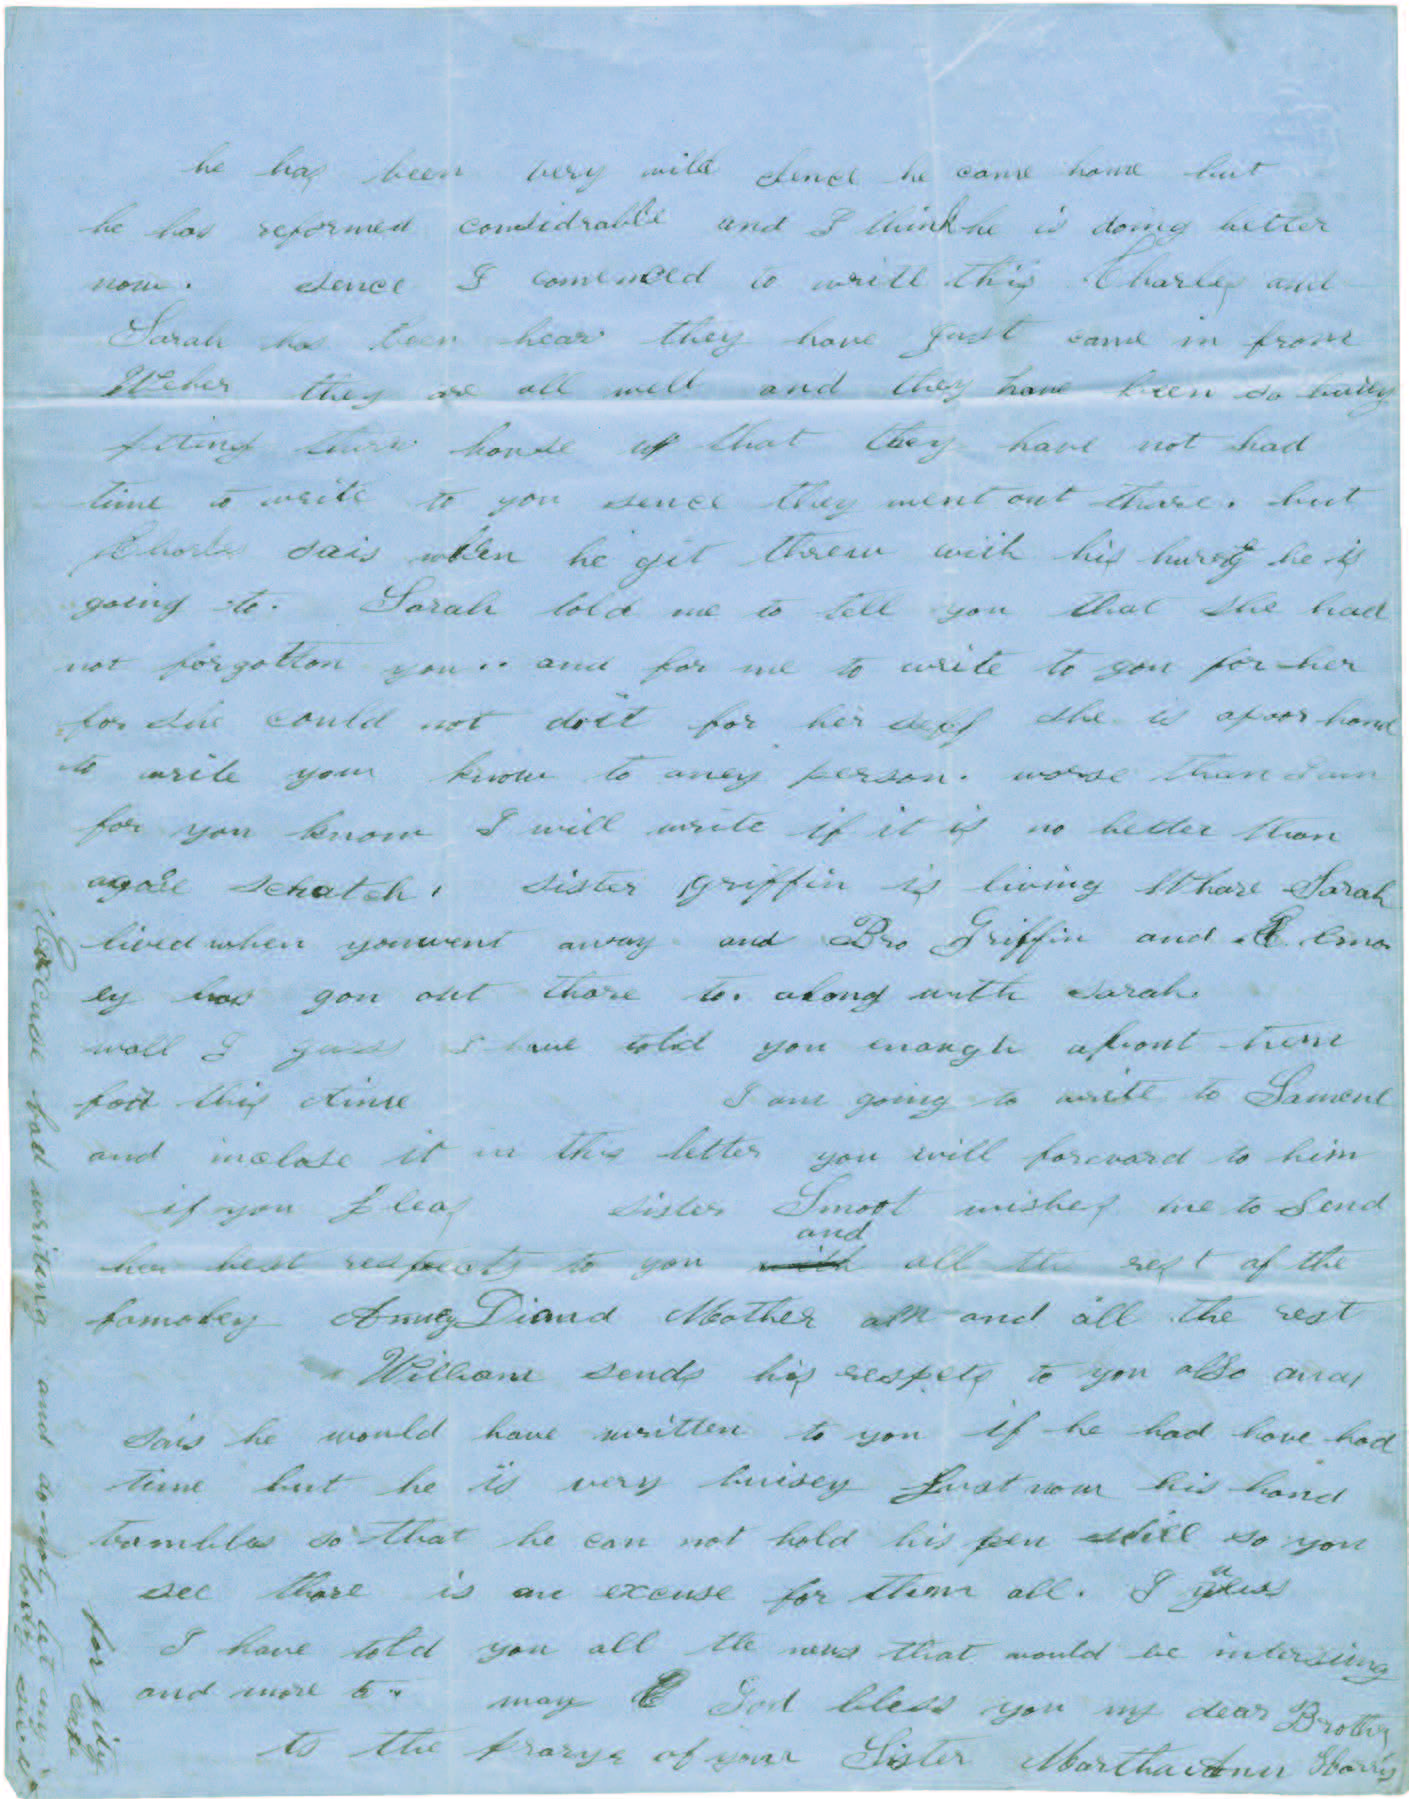 handwritten letter page 4